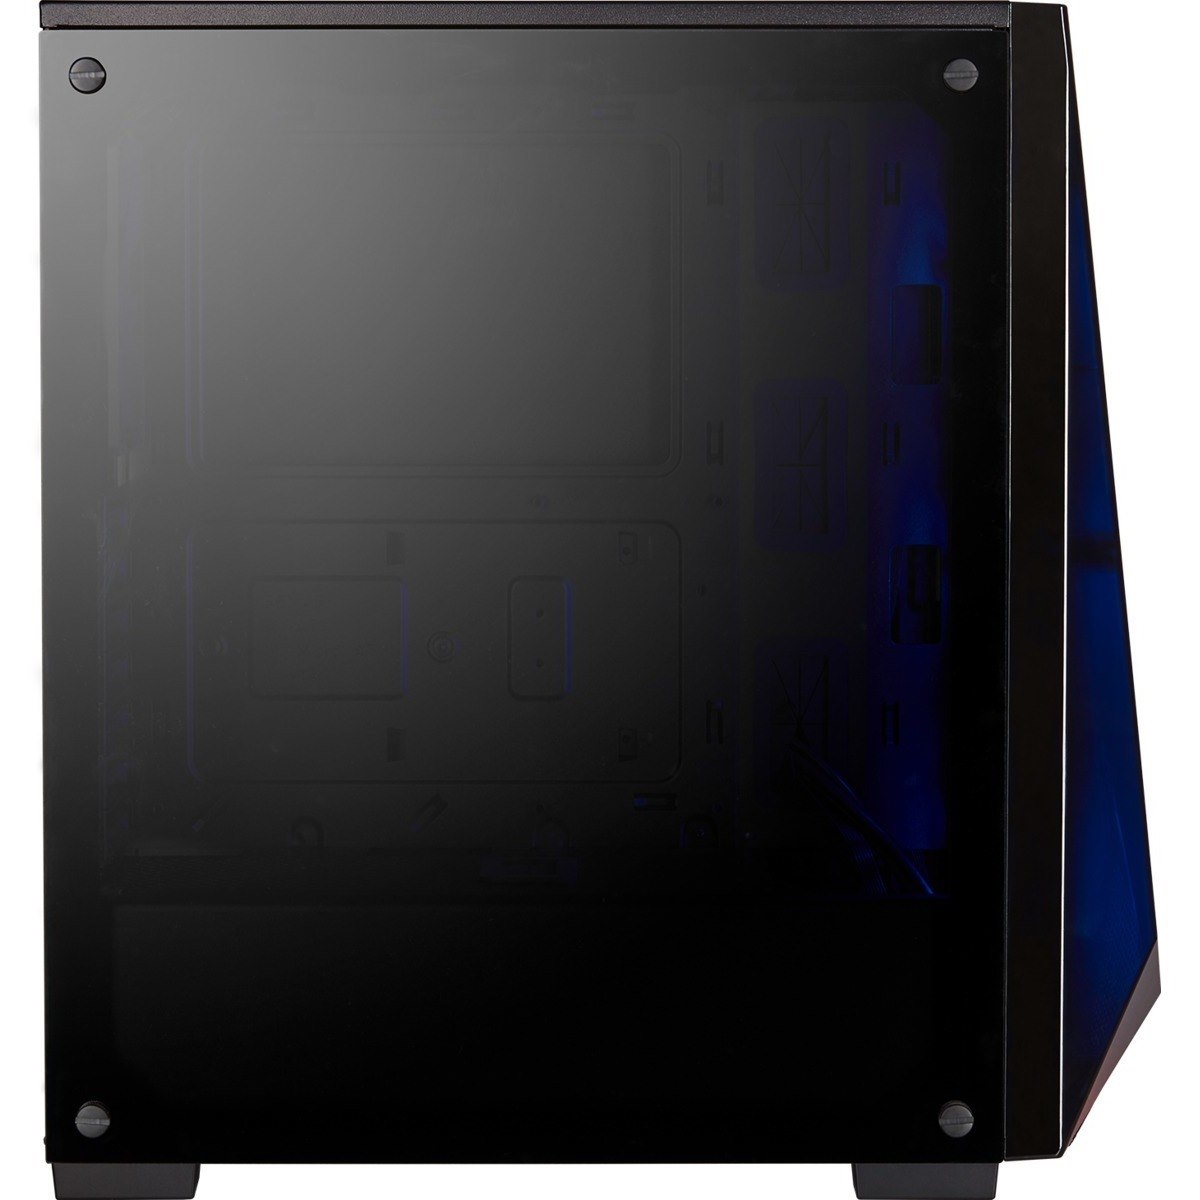 Mid-Tower RGB #Back2 Corsair Case ATX PC da Gaming Corsair Carbide SPEC-DELTA 